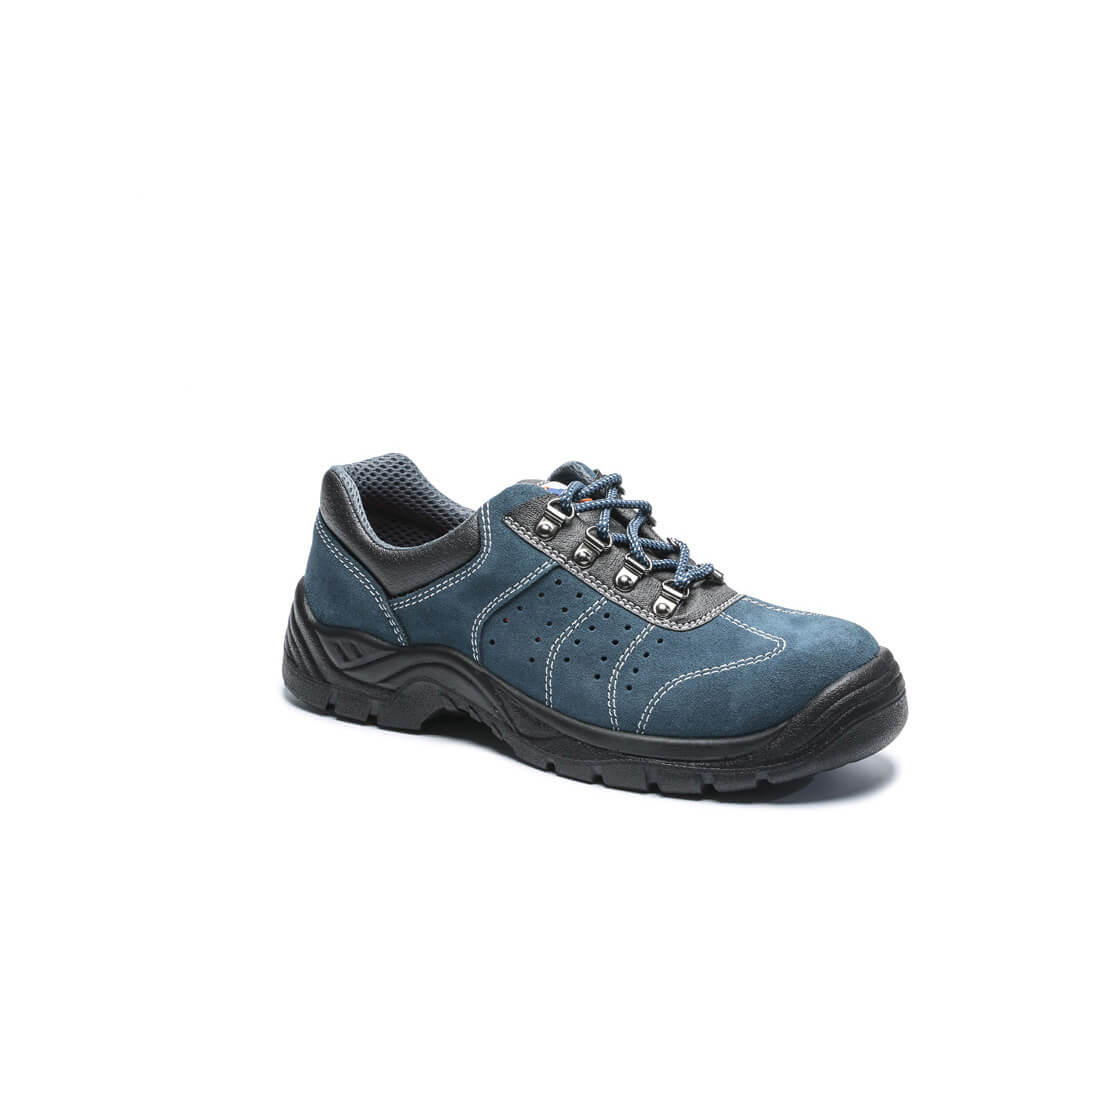 Pantof Perforat Steelite™ S1P - Incaltaminte de protectie | Bocanci, Pantofi, Sandale, Cizme